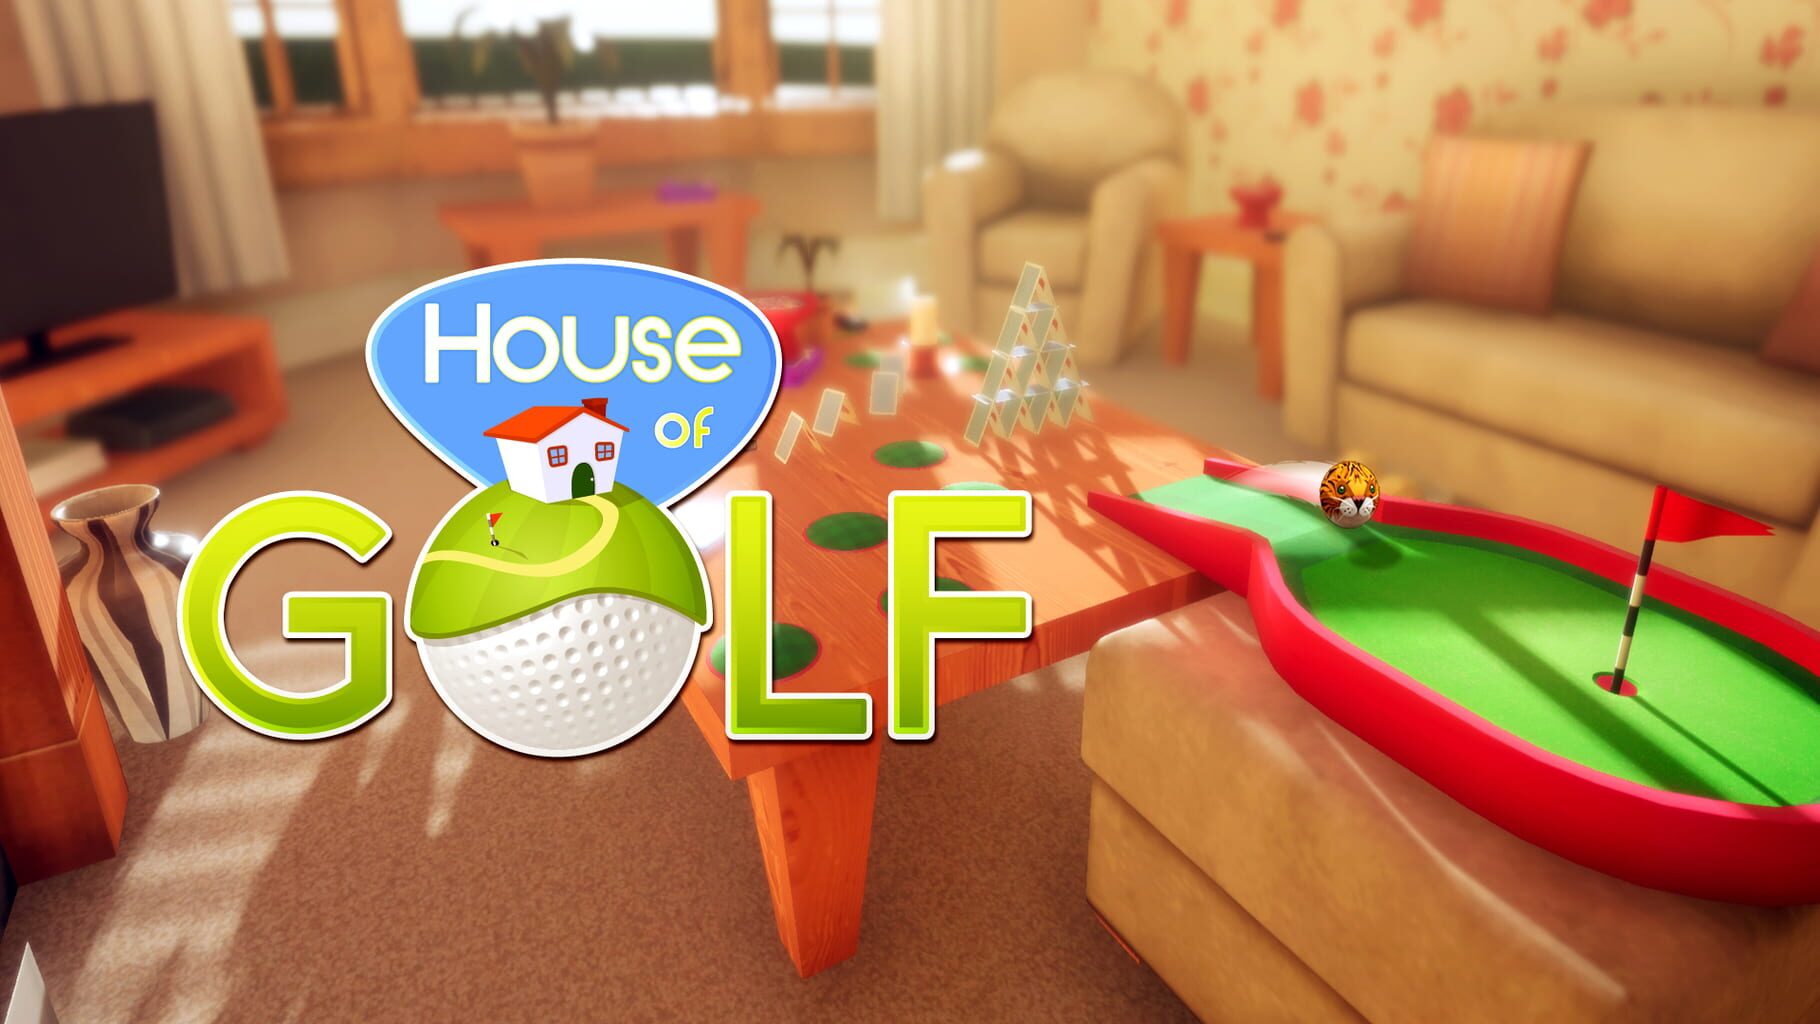 House of Golf artwork